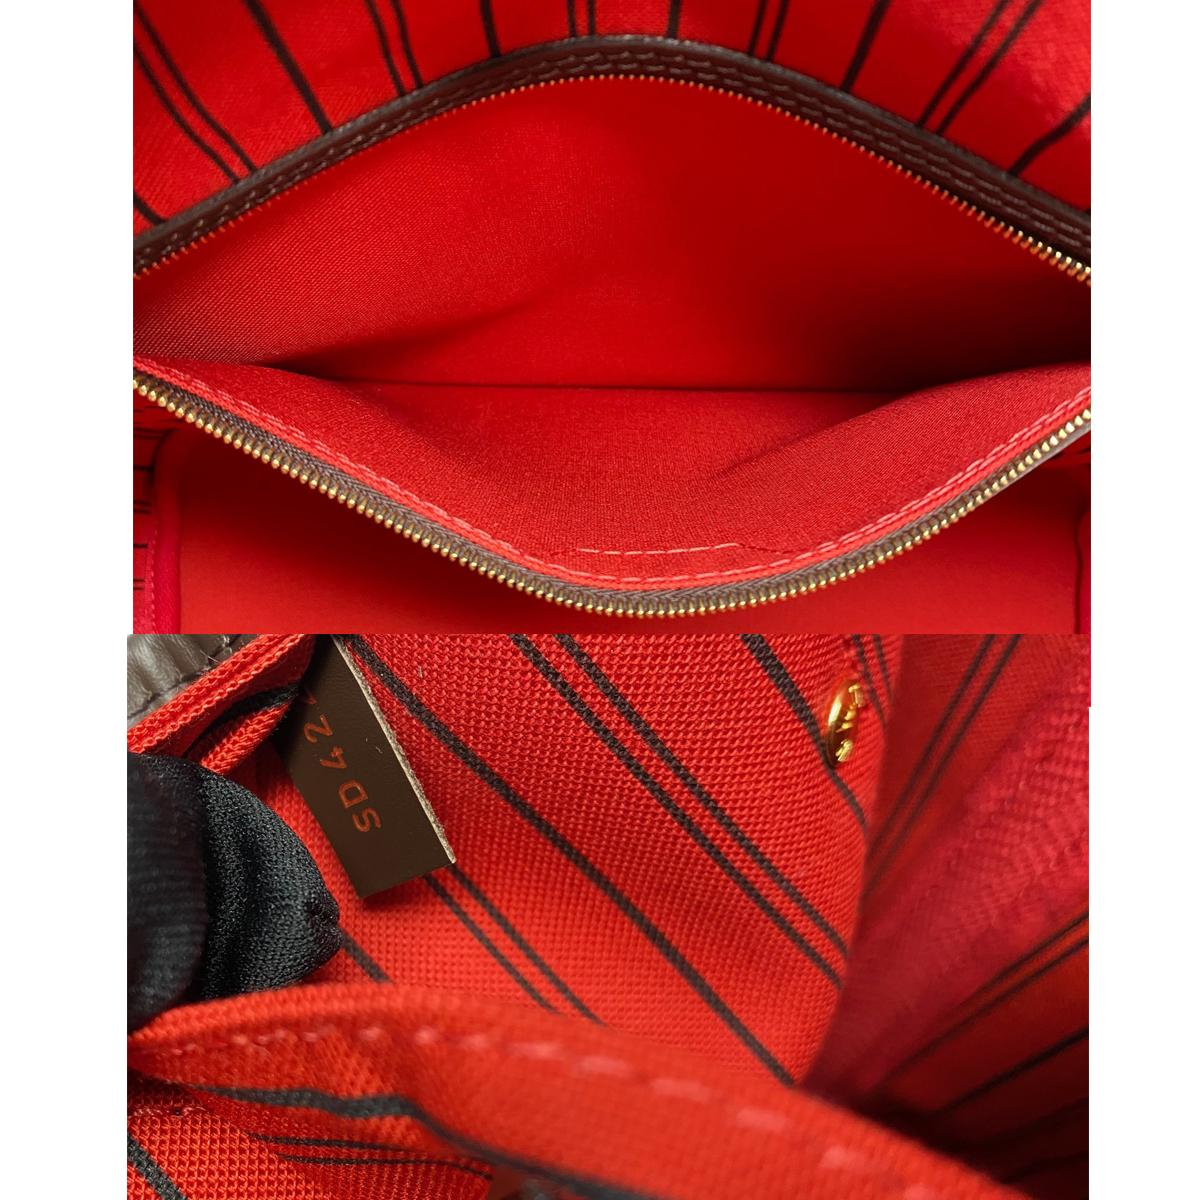 Men's Louis Vuitton Neverfull MM Cherry Damier Ebene Leather Canvas Tote Handbag